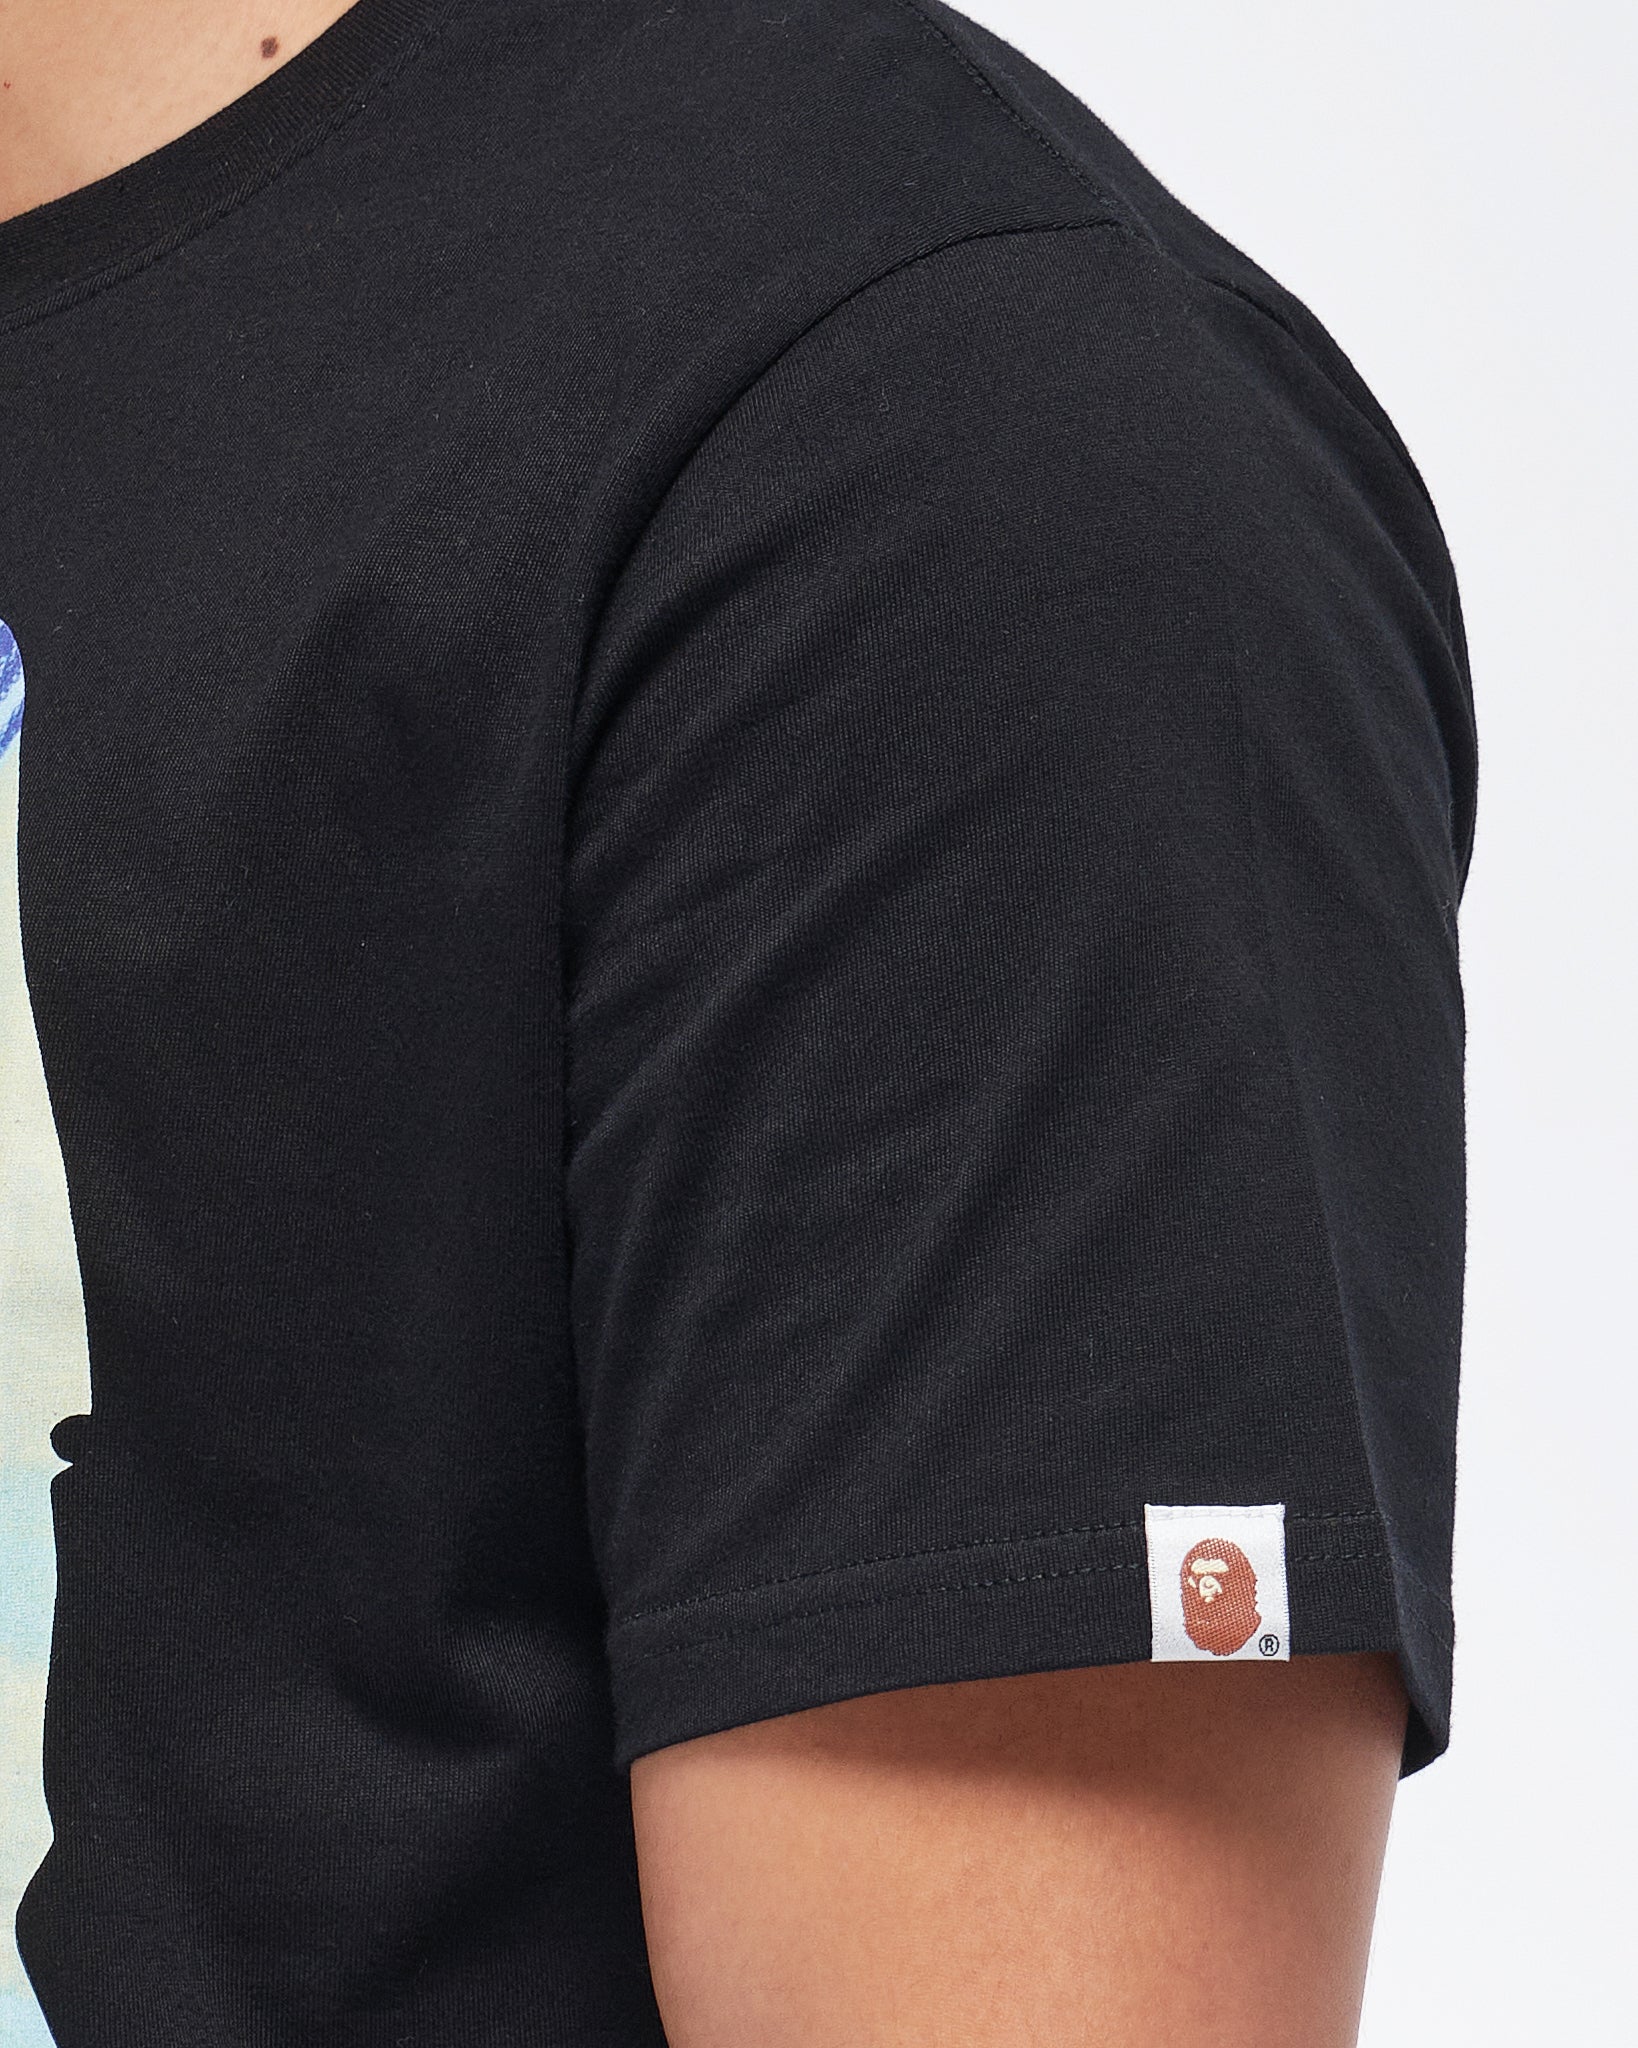 MOI OUTFIT-Tie dye Gorrilla Face Printed Men T-Shirt 17.90